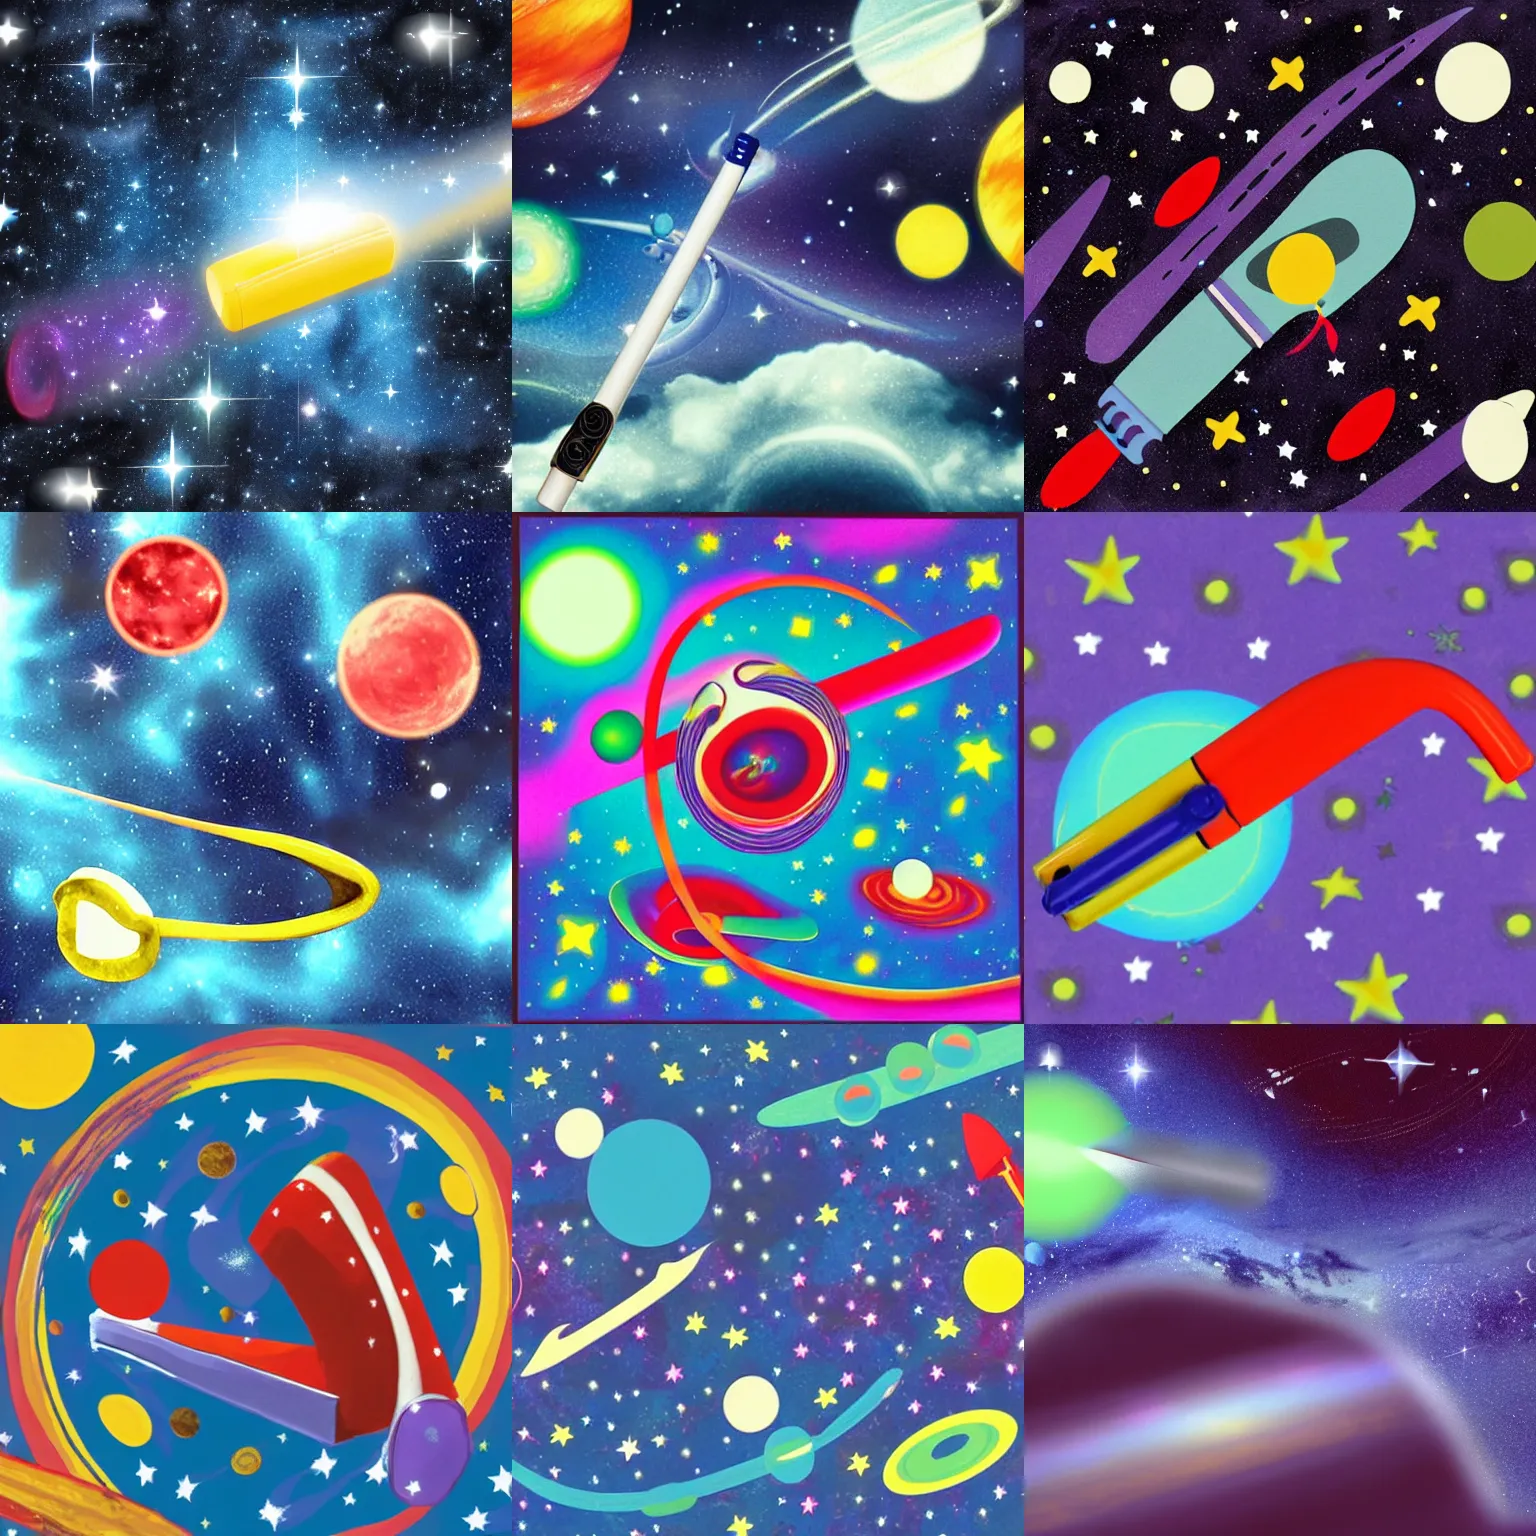 Prompt: kazoo in space, stars, galaxies